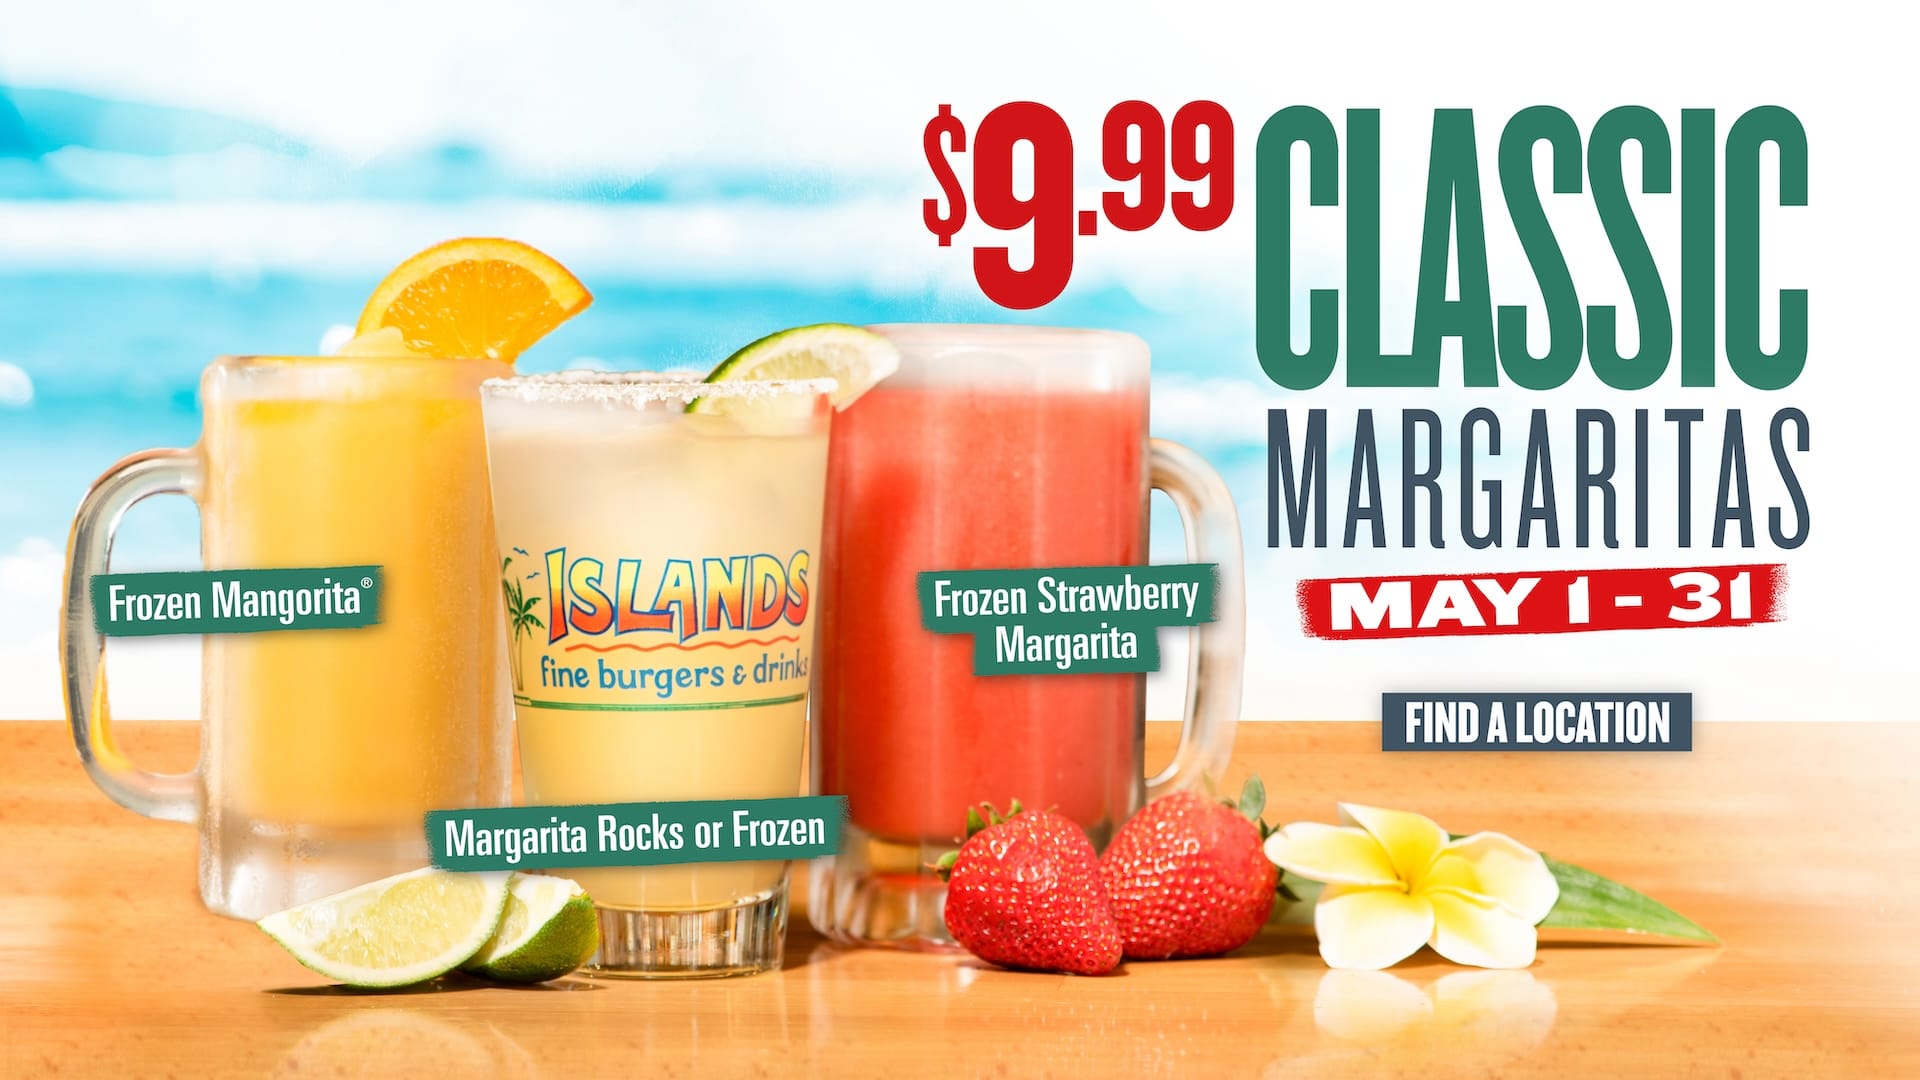 $9.99 Classic Margaritas May 1-31 - Frozen Mangorita, Margarita Rocks or Frozen - Frozen Strawberry Margarita - Find a Location